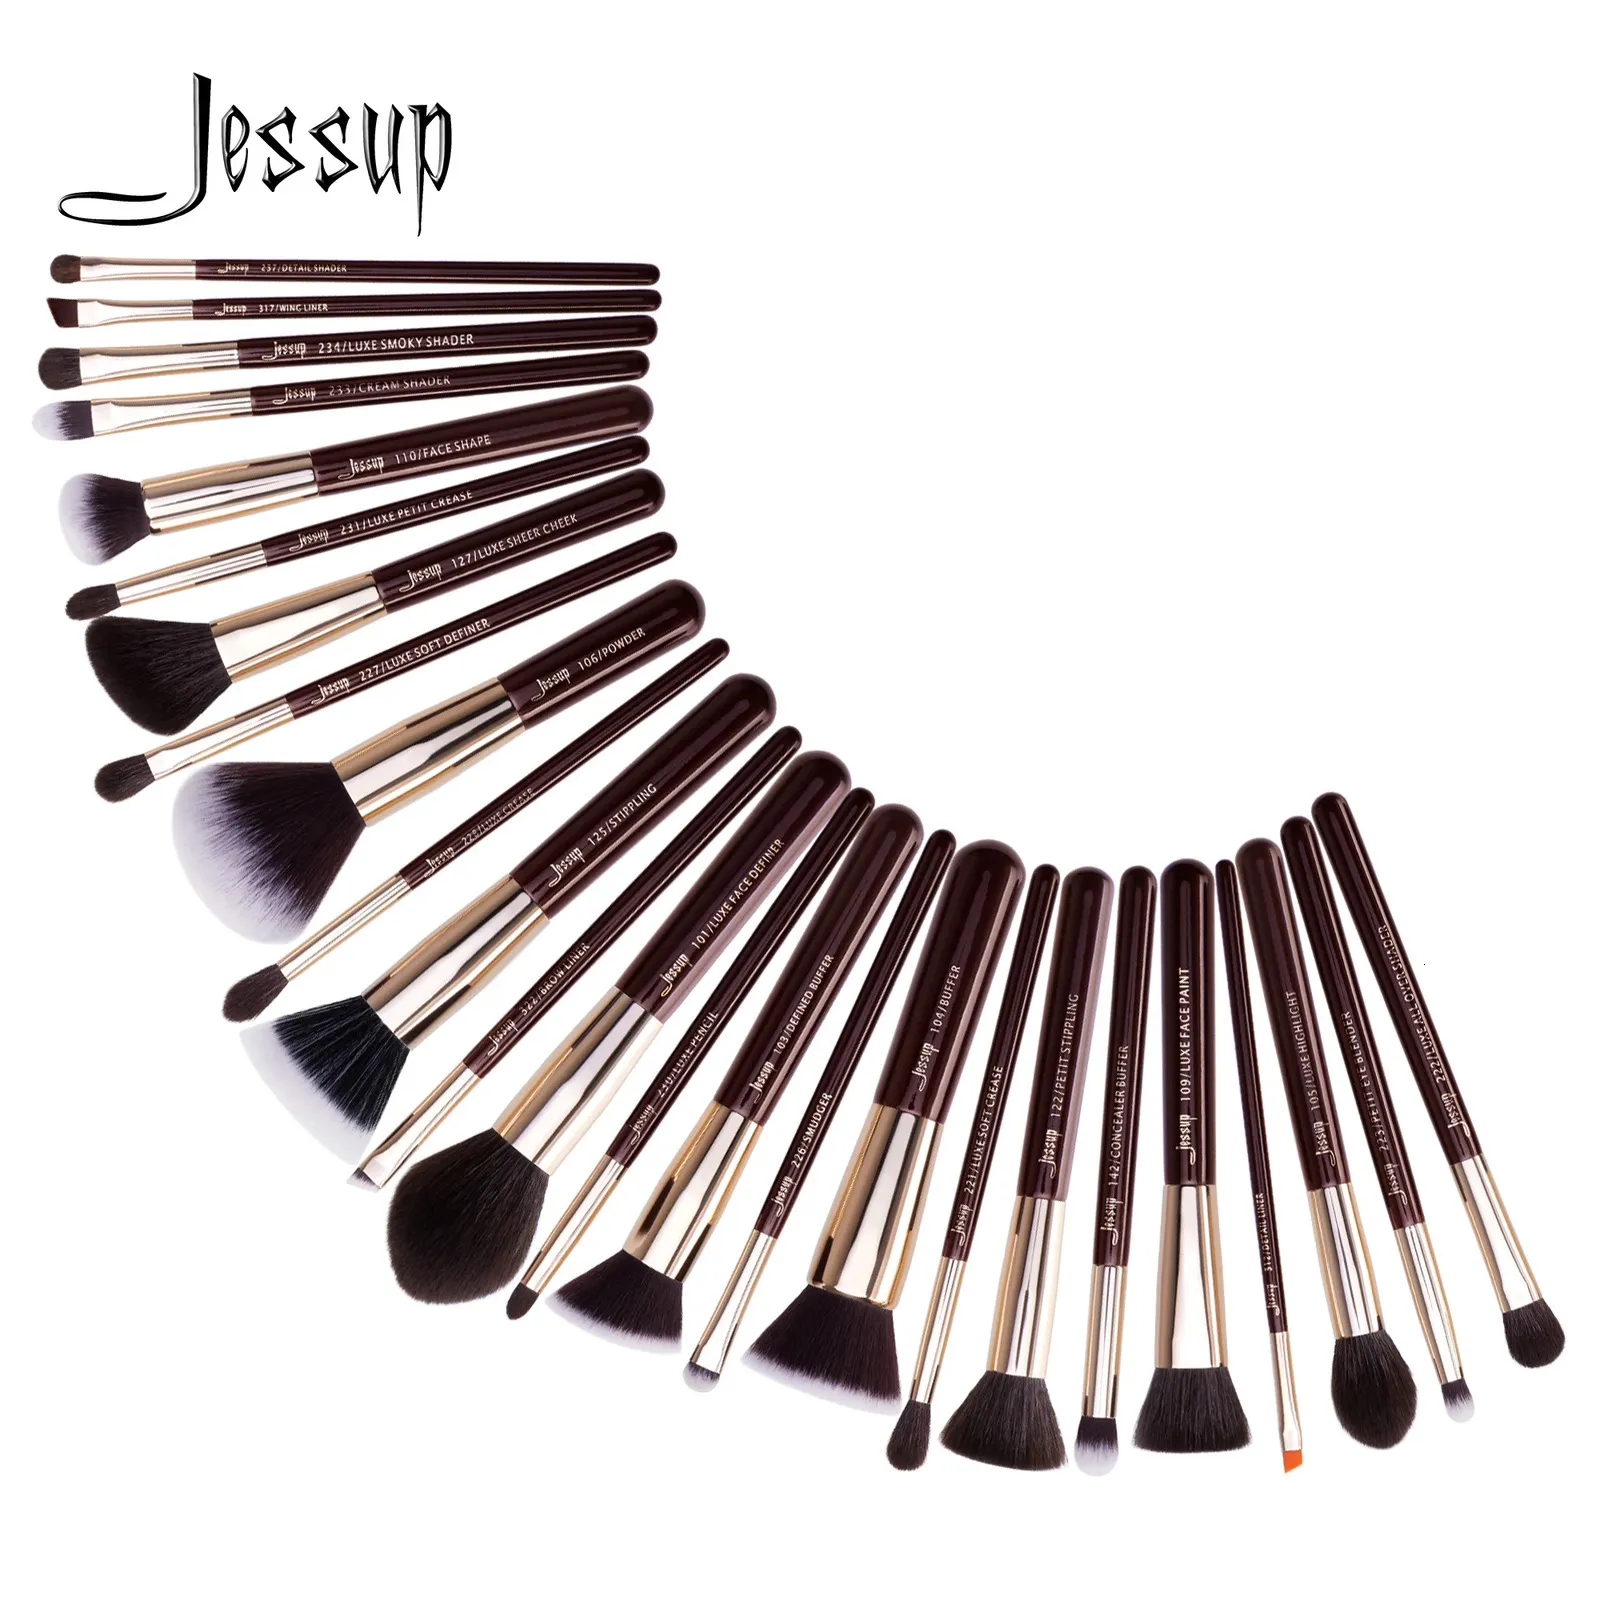 Jessup Makeup Brushes Set Professional Natural-Synthetic Hair Makeup Brush Foundation Powder Contour Eyeshadow 25pcs240102